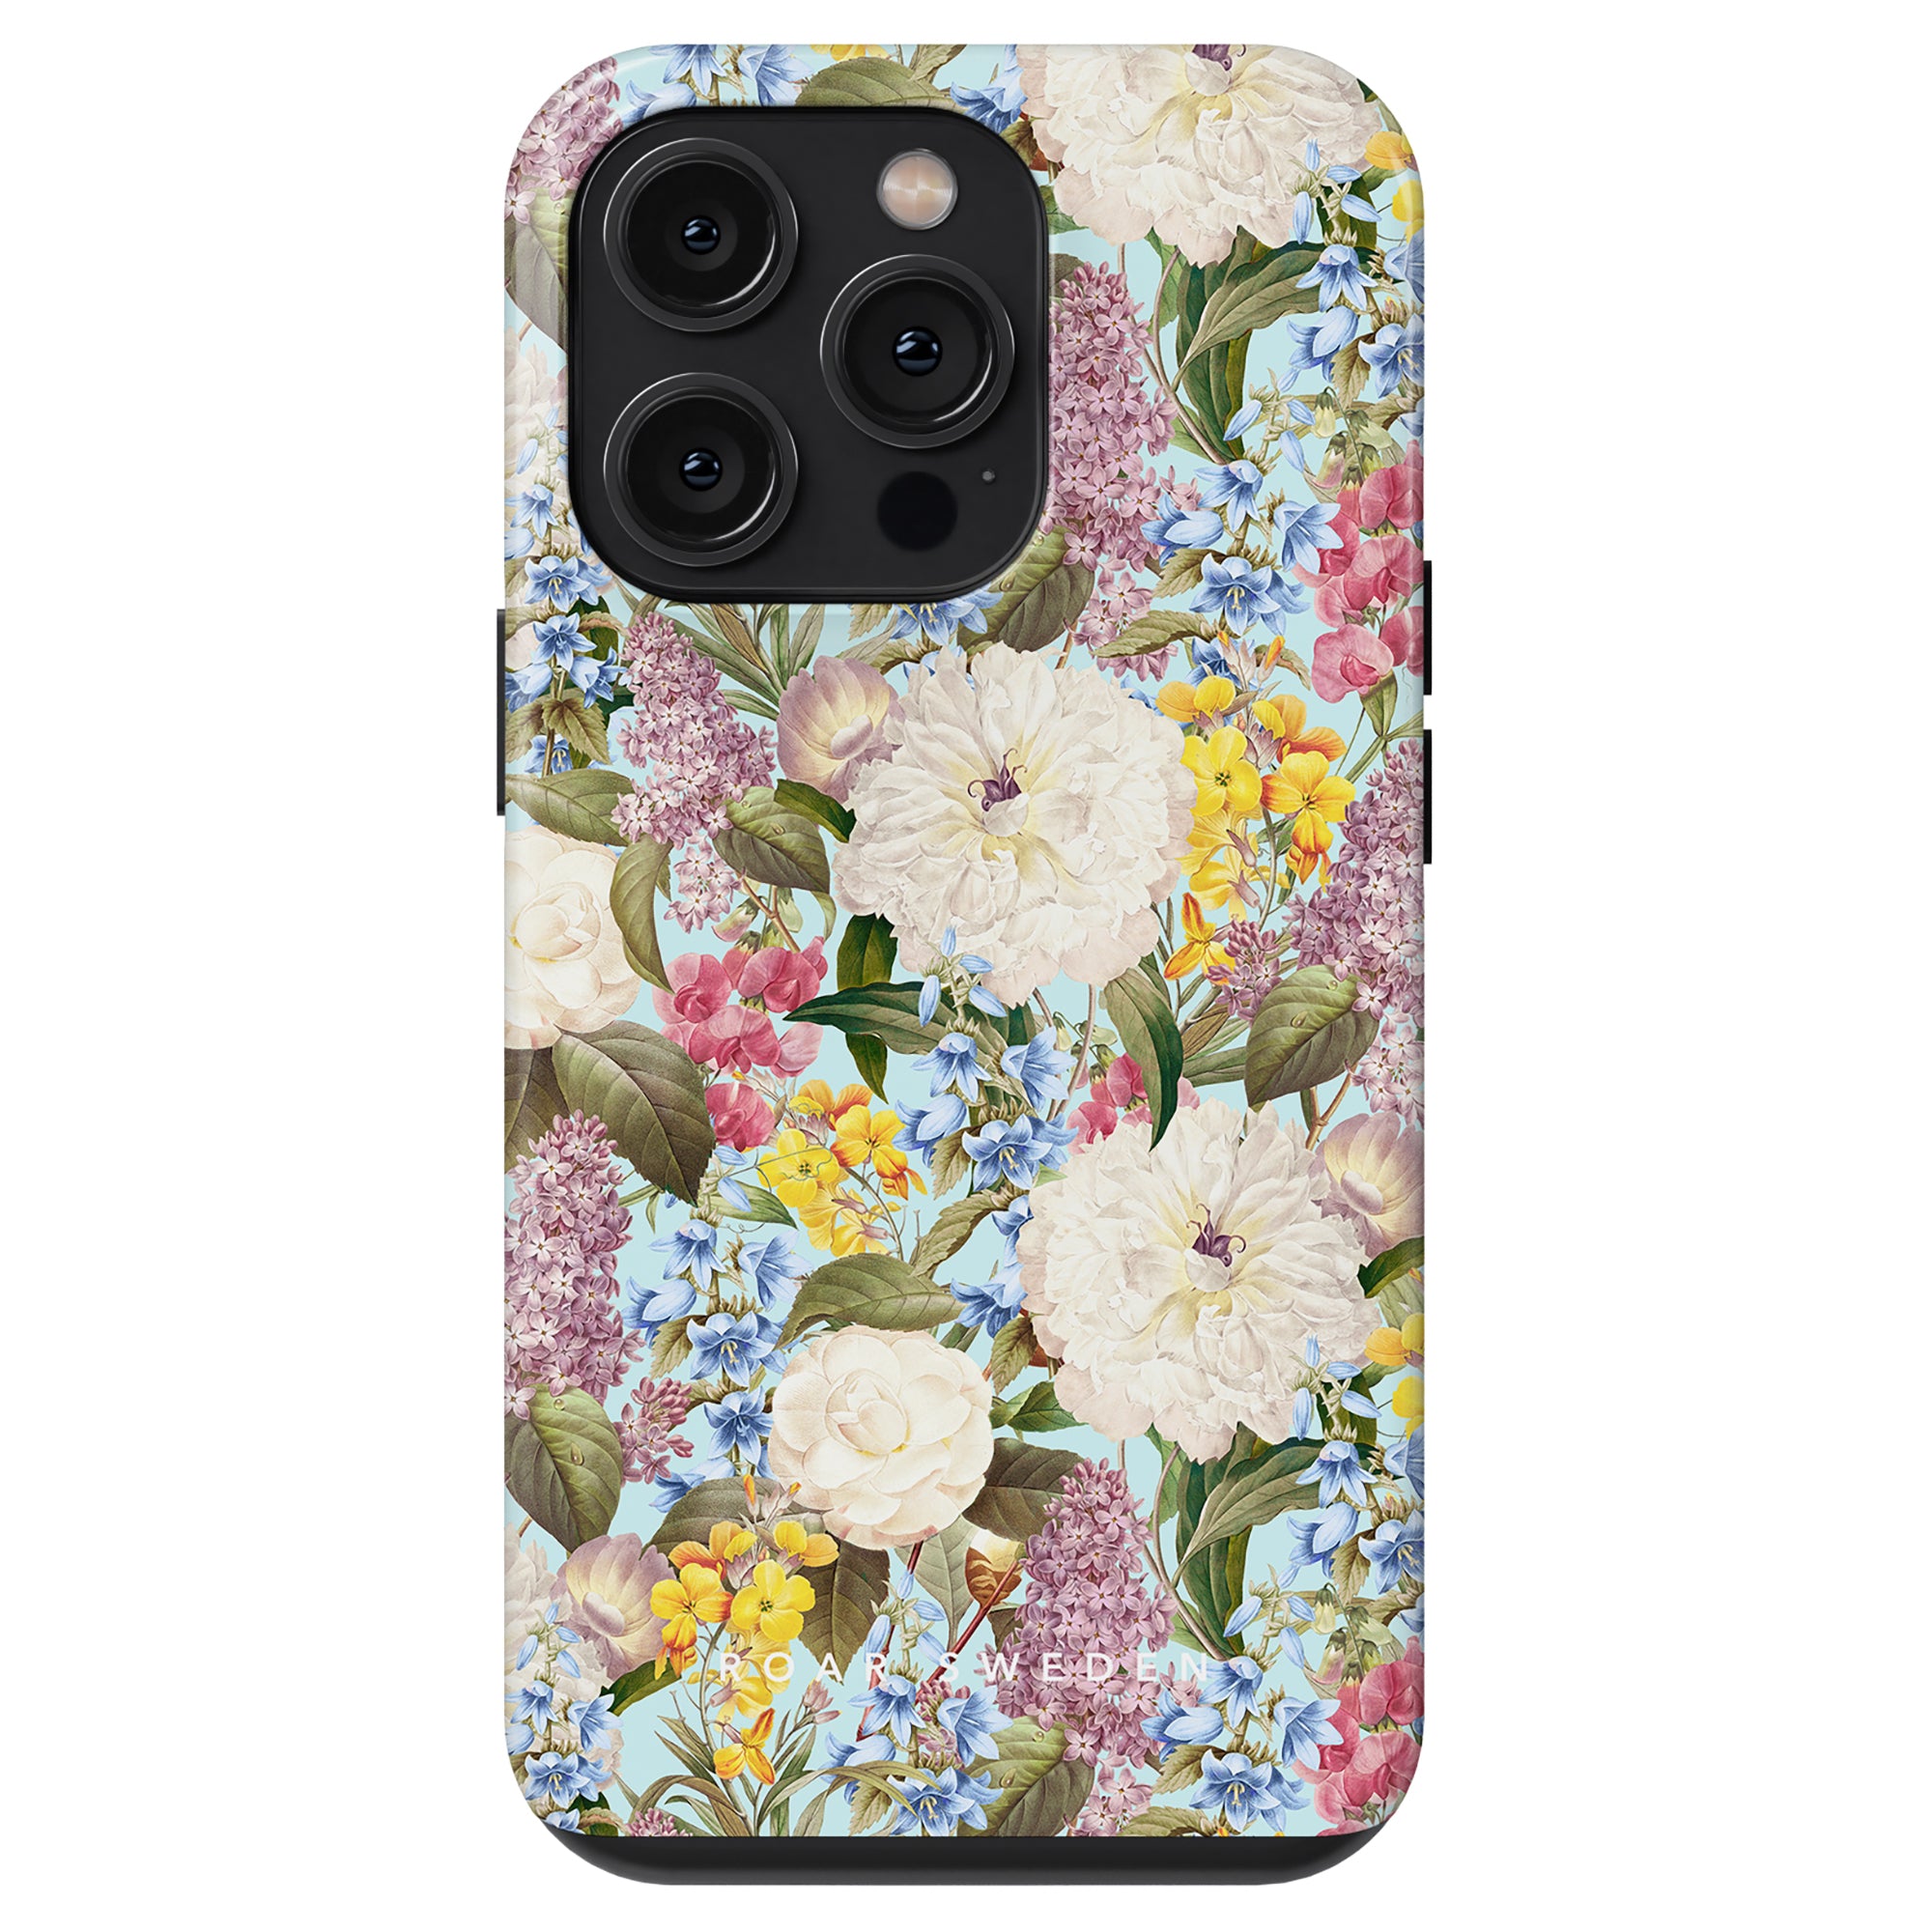 Fragrant Paradise - Tough Case, stylish smartphone case with camera cutouts.